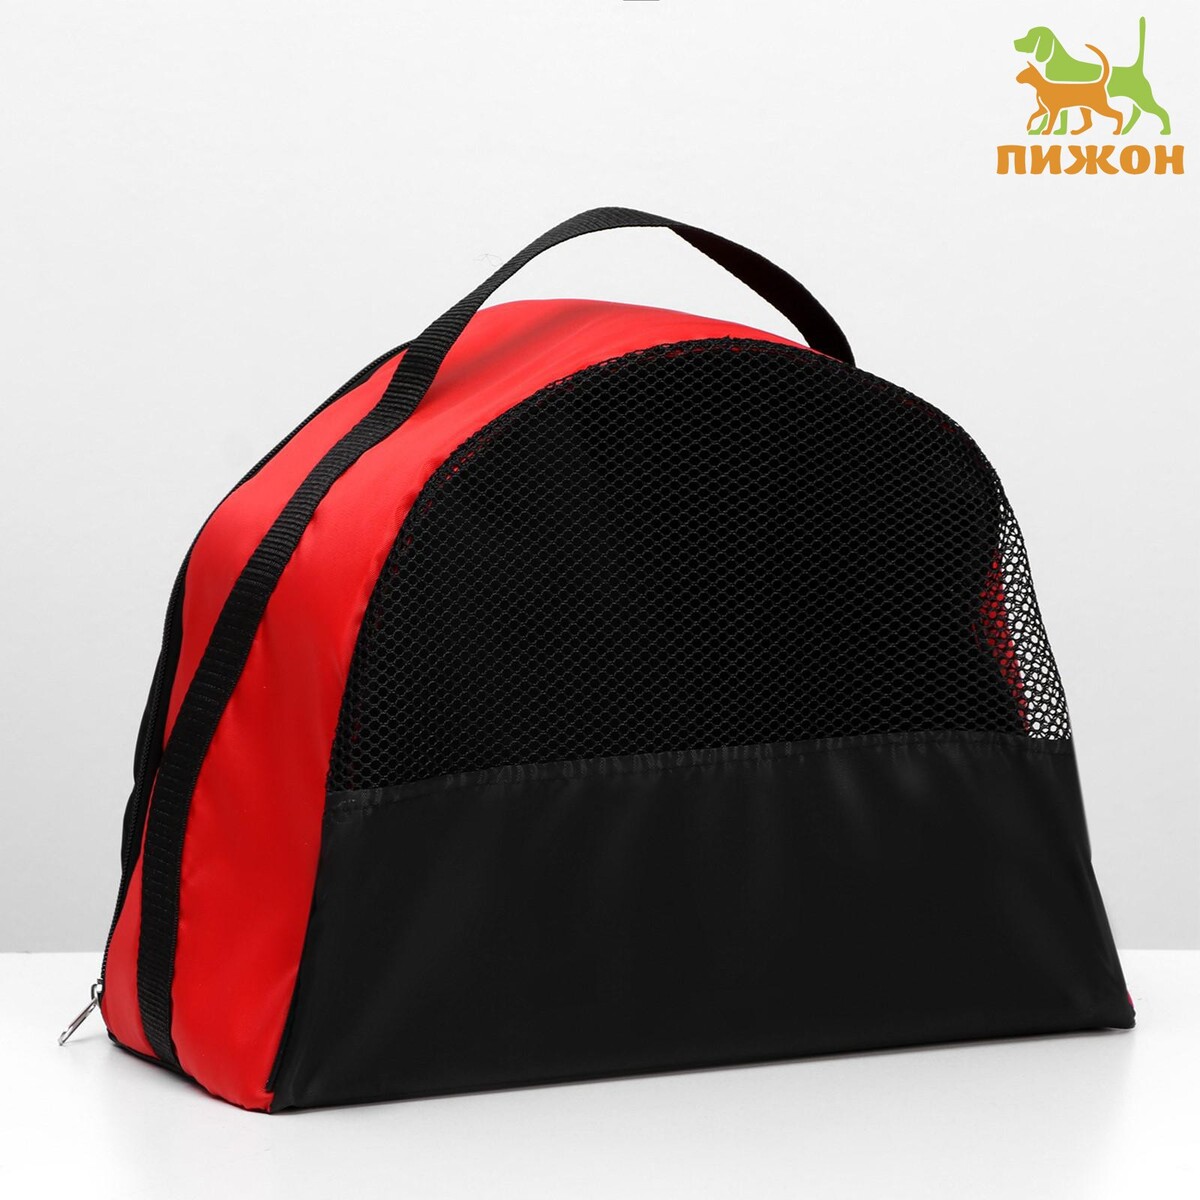 Сумка - переноска для животных, оксфорд, 36 х 17 х 25 см, красная сумка переноска для животных на плечо пвх 37 х 13 х 20 см красная